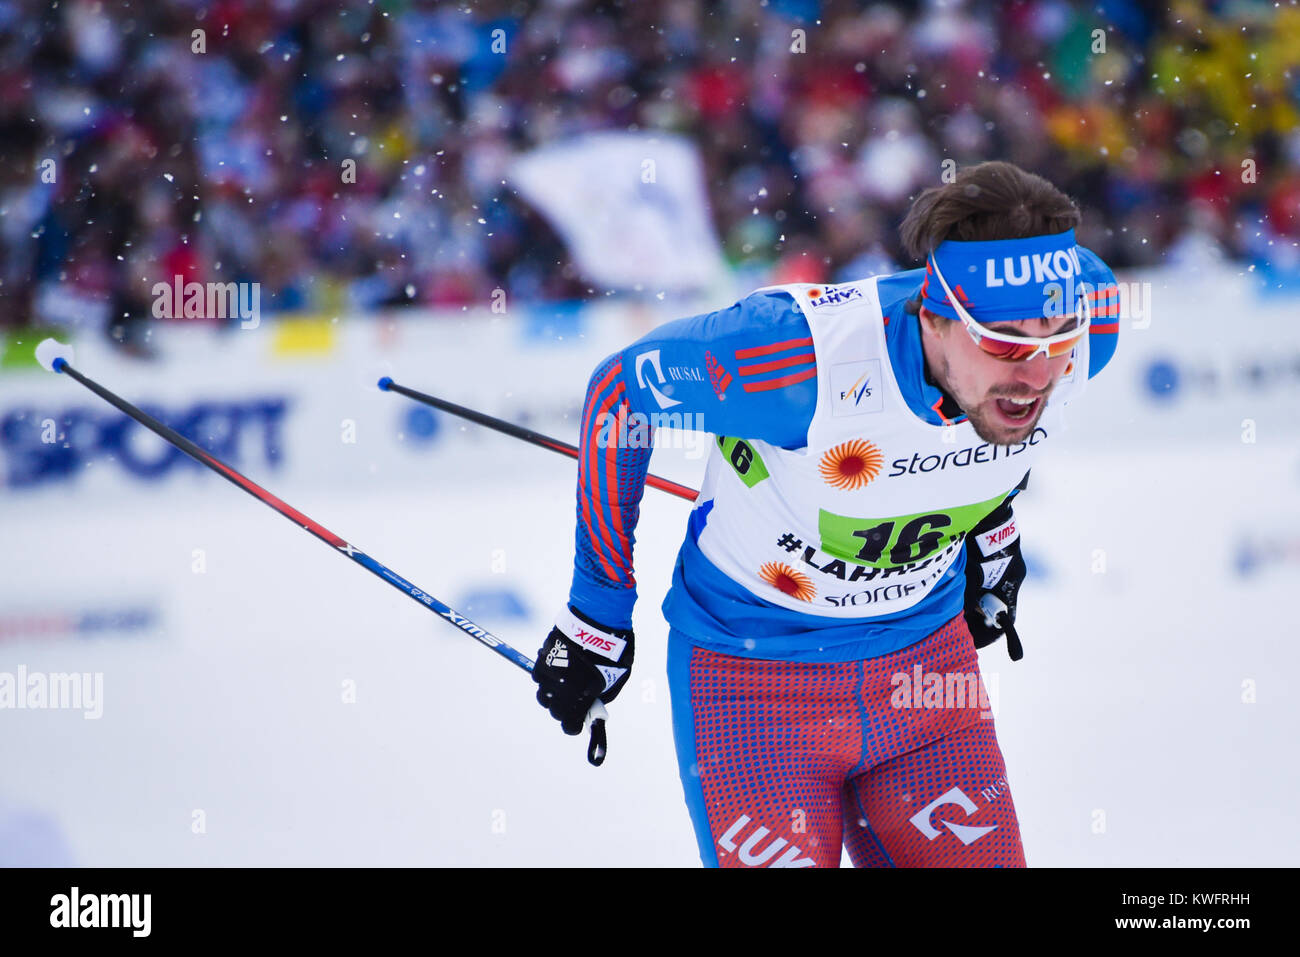 Sergey Ustiugov (Russia) finishing final meters of team sprint, 2017 World Nordic Ski Championships, Lahti, Finland. His team won. Stock Photo